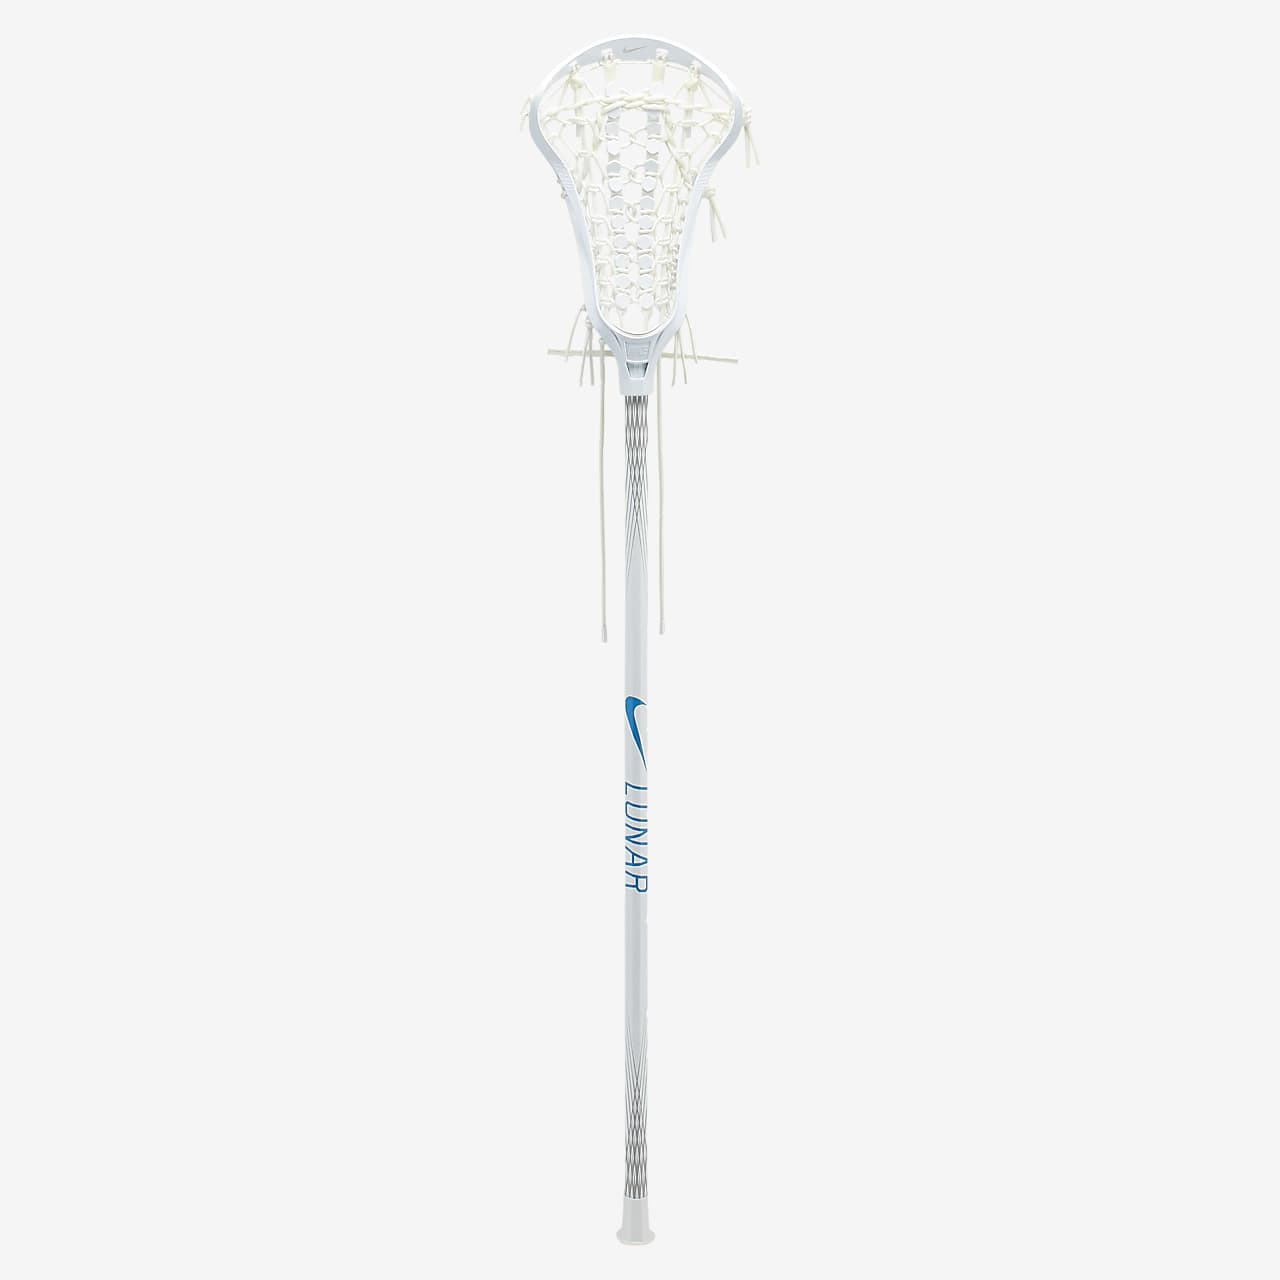 nike lunar 2 lacrosse stick